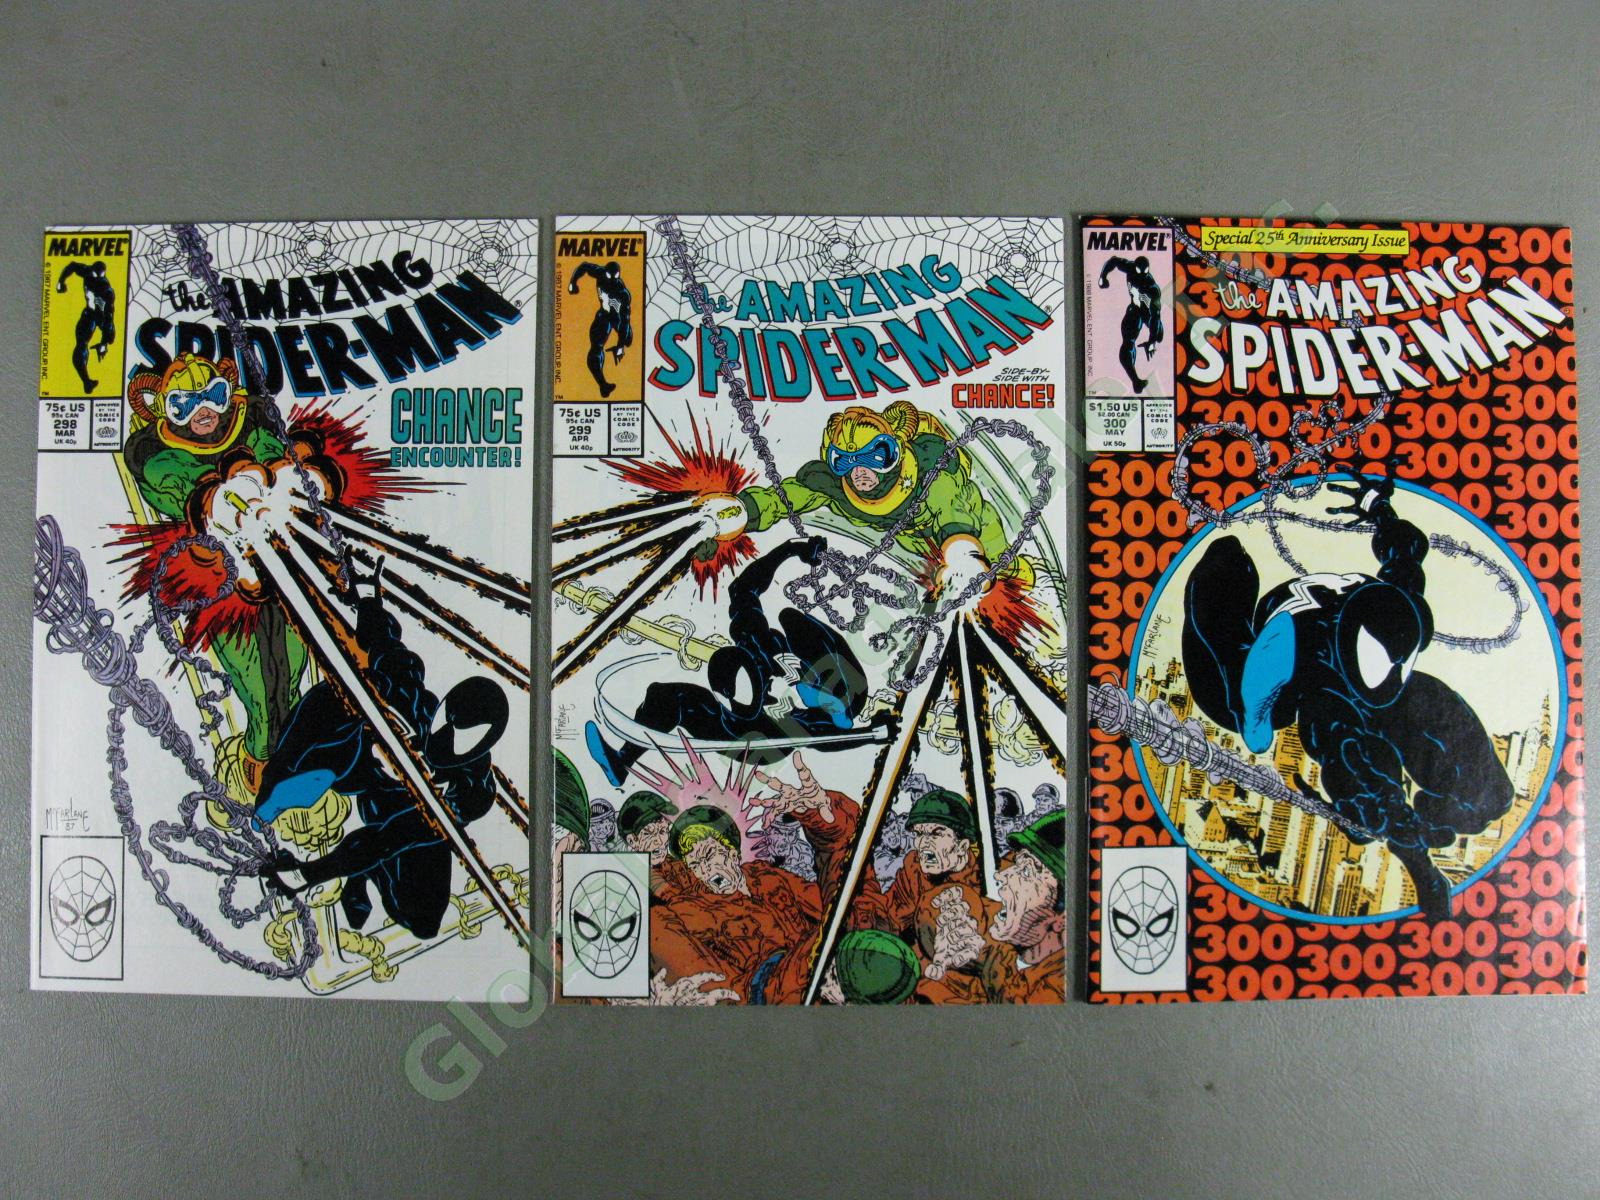 1988 Marvel Amazing Spiderman #298 #299 + #300 First Todd McFarlane Venom Covers